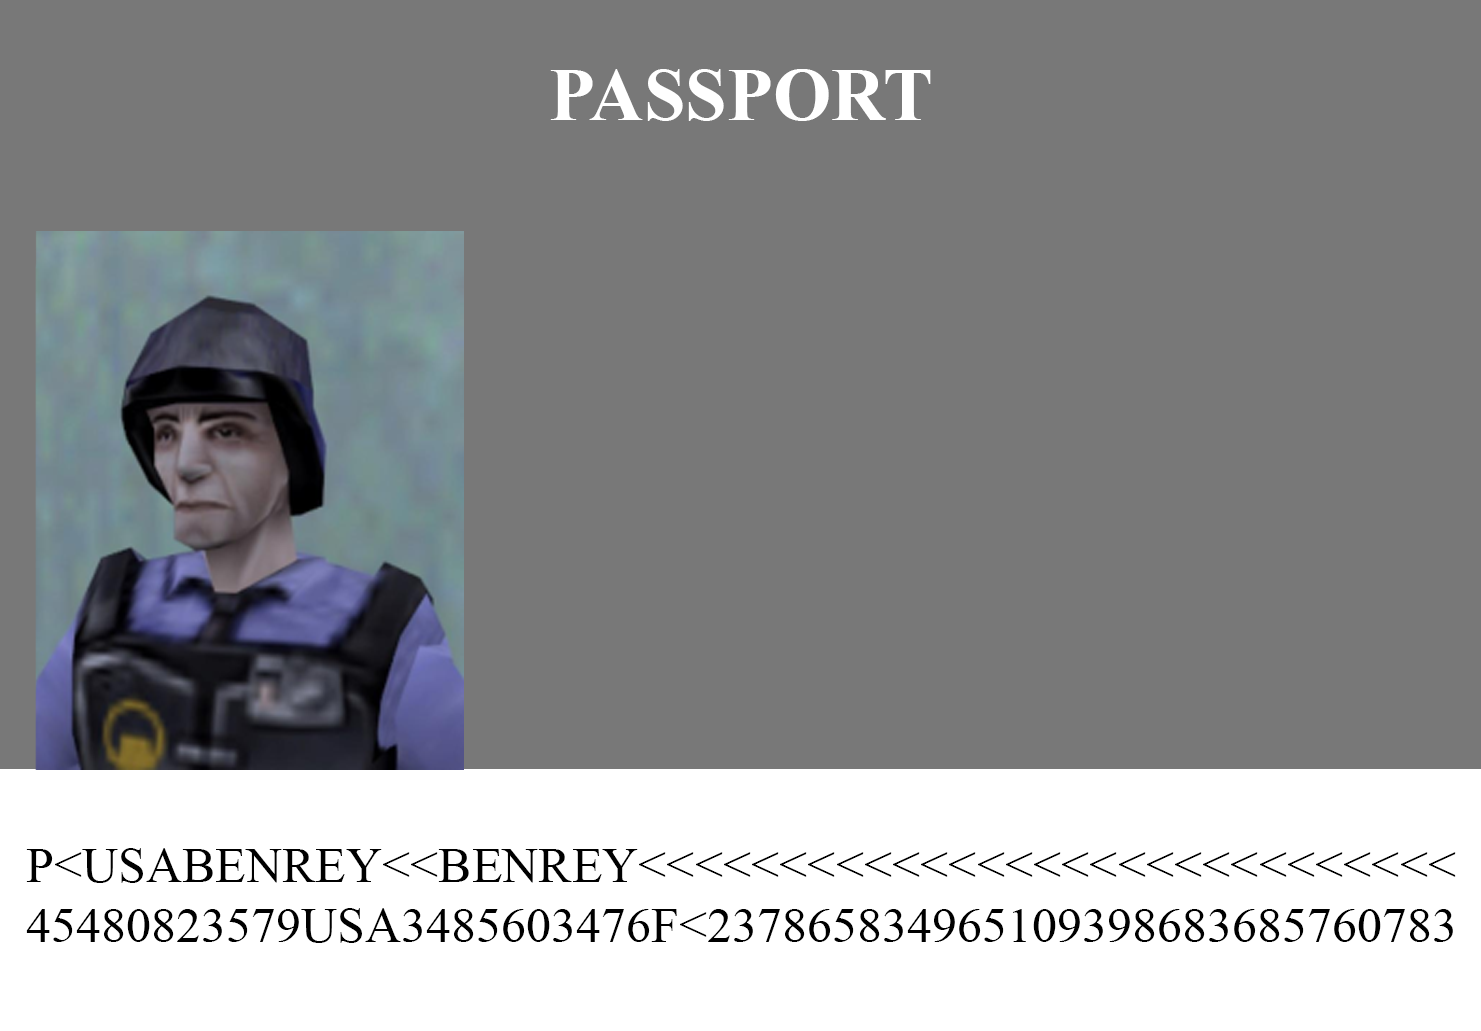 BENREY_PASSPORT.png